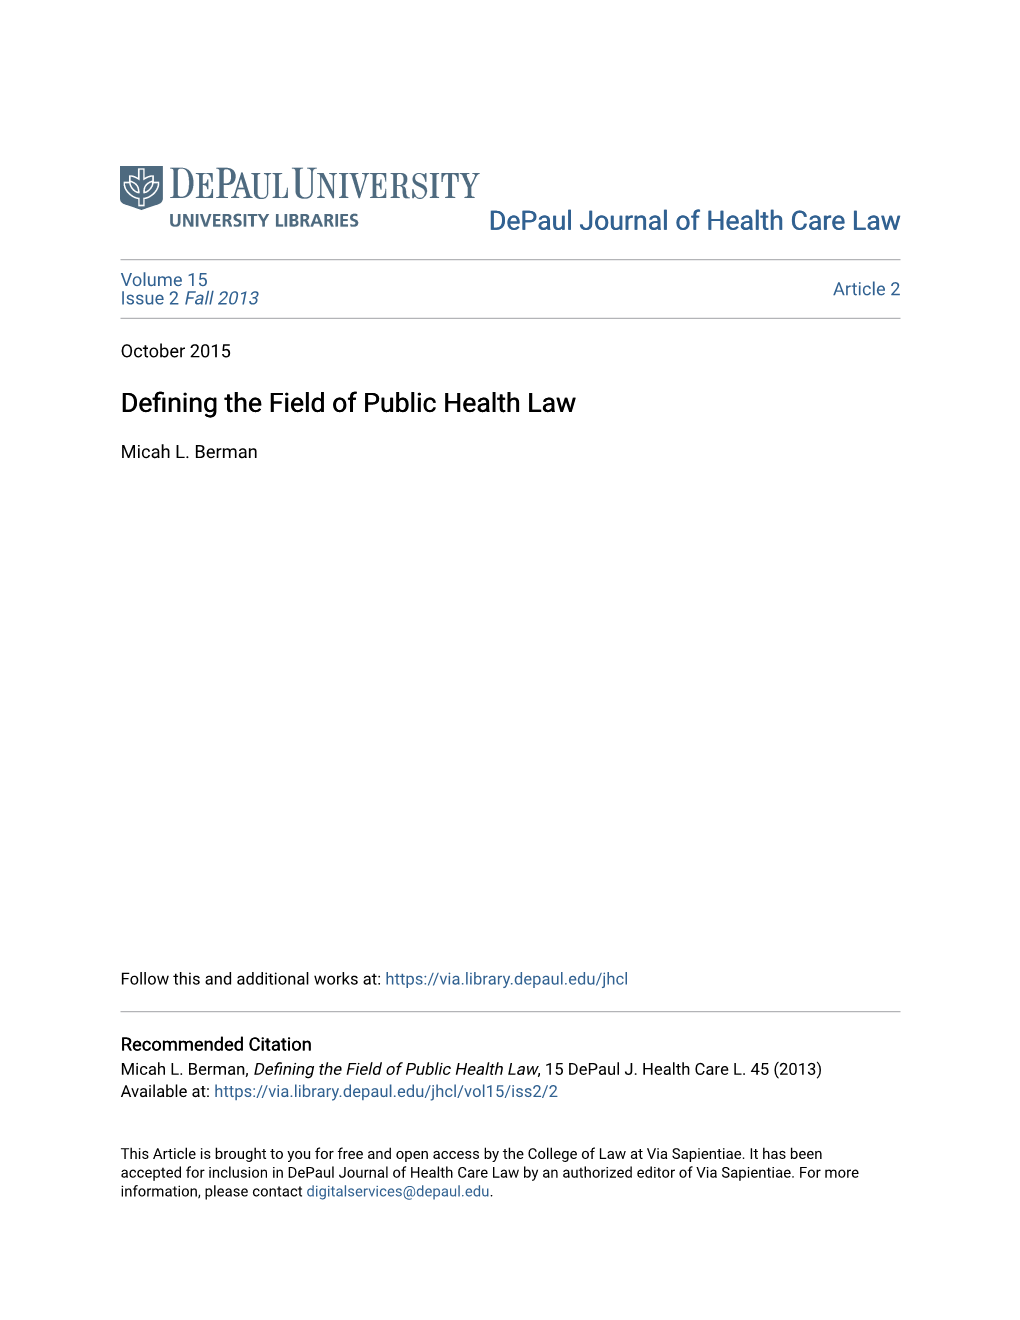 Defining the Field of Public Health Law